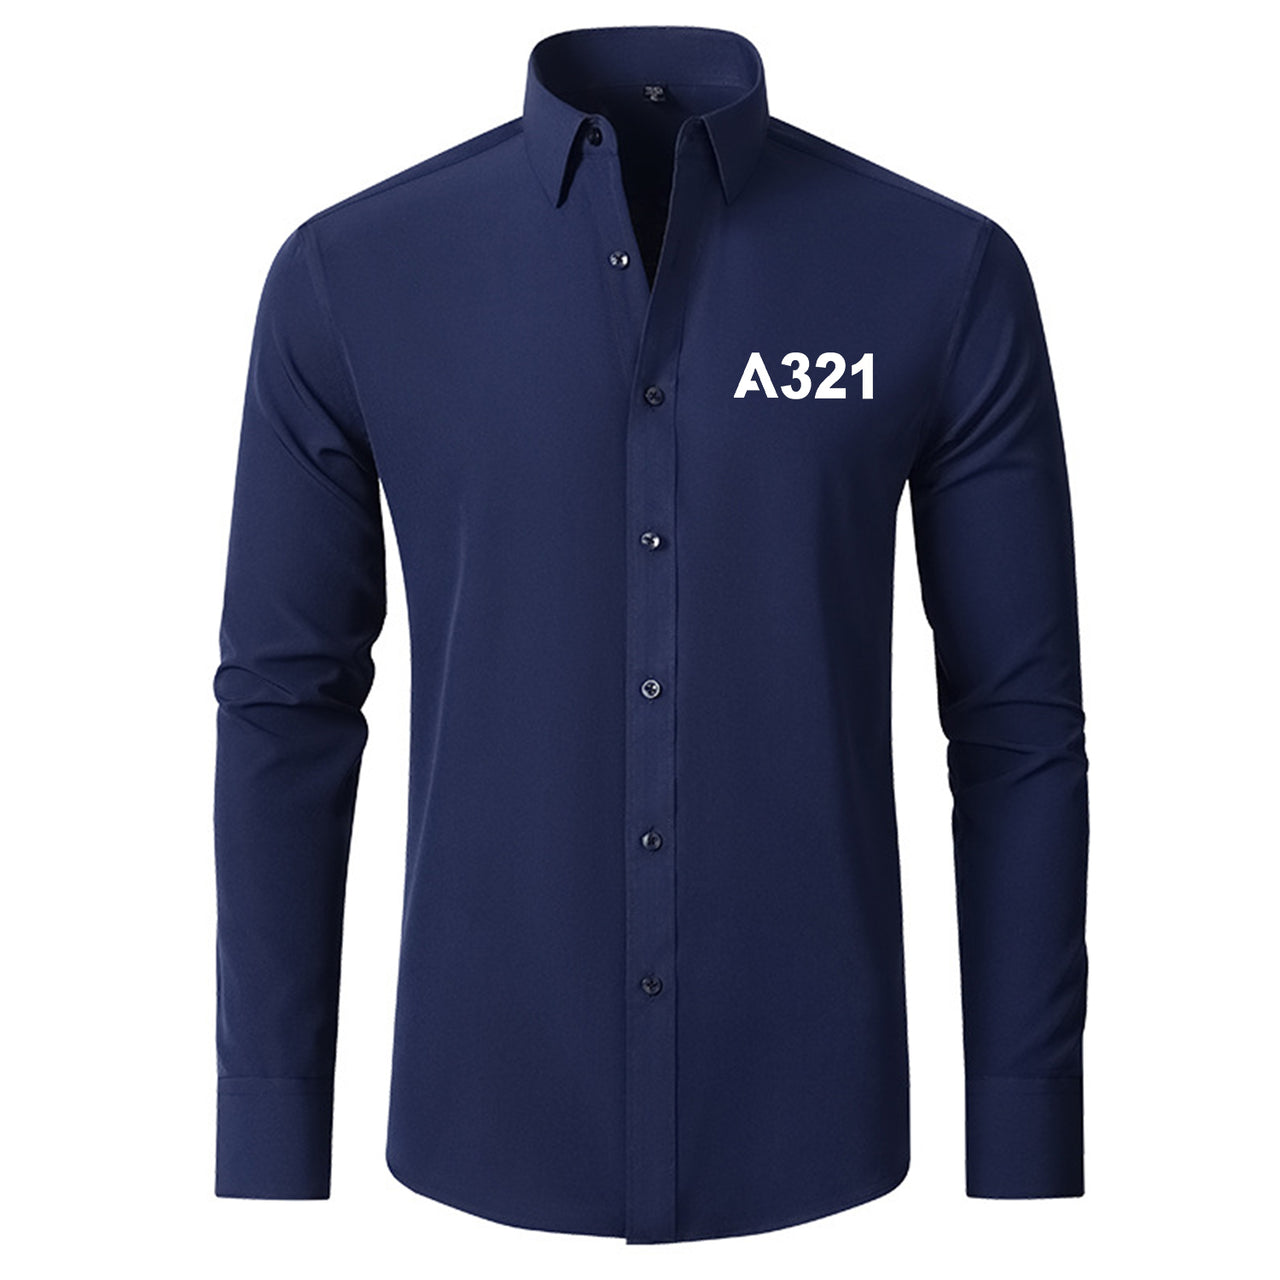 A321 Flat Text Designed Long Sleeve Shirts